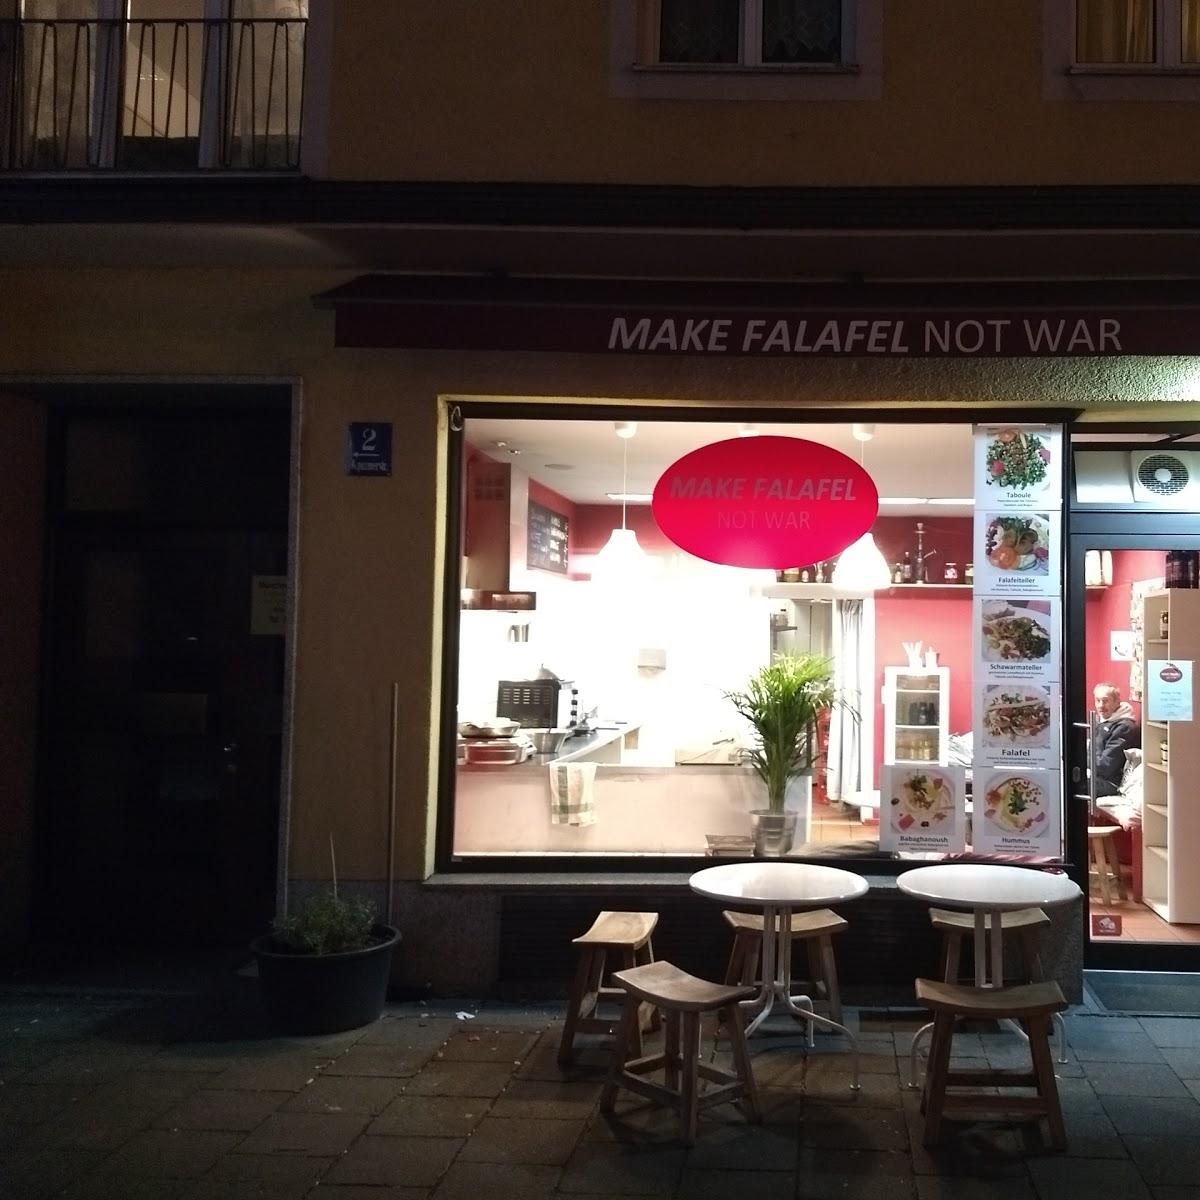 Restaurant "Make Falafel not War" in München